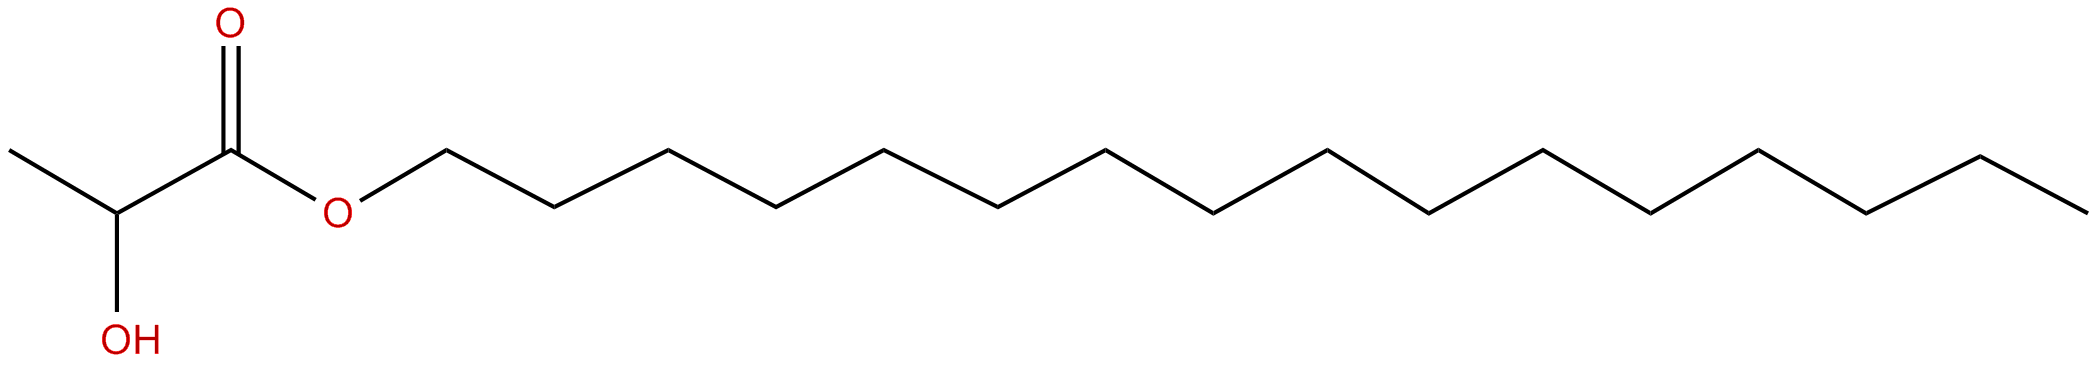 Image of hexadecyl 2-hydroxypropanoate